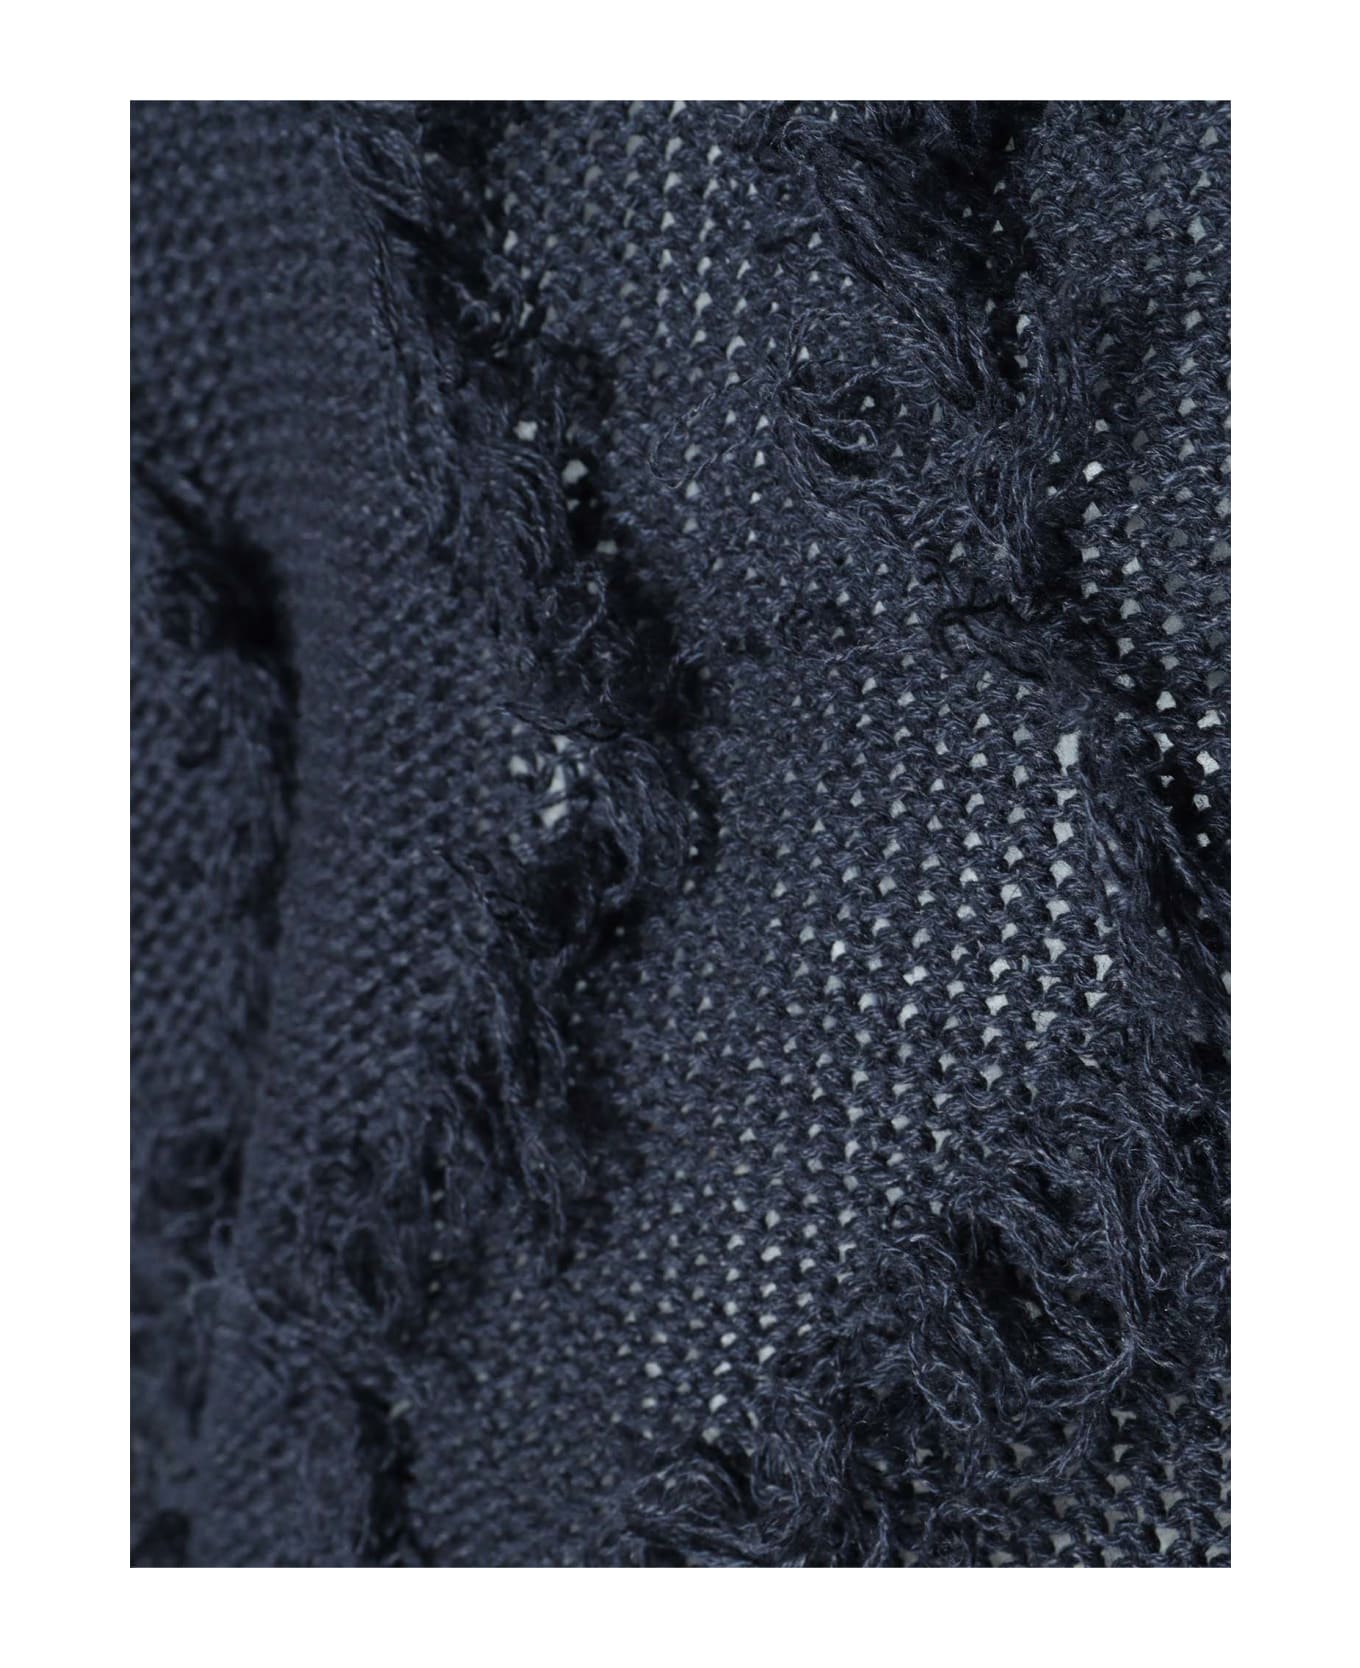 Peserico Black Tricot Sweater With Fringes - BLACK ニットウェア